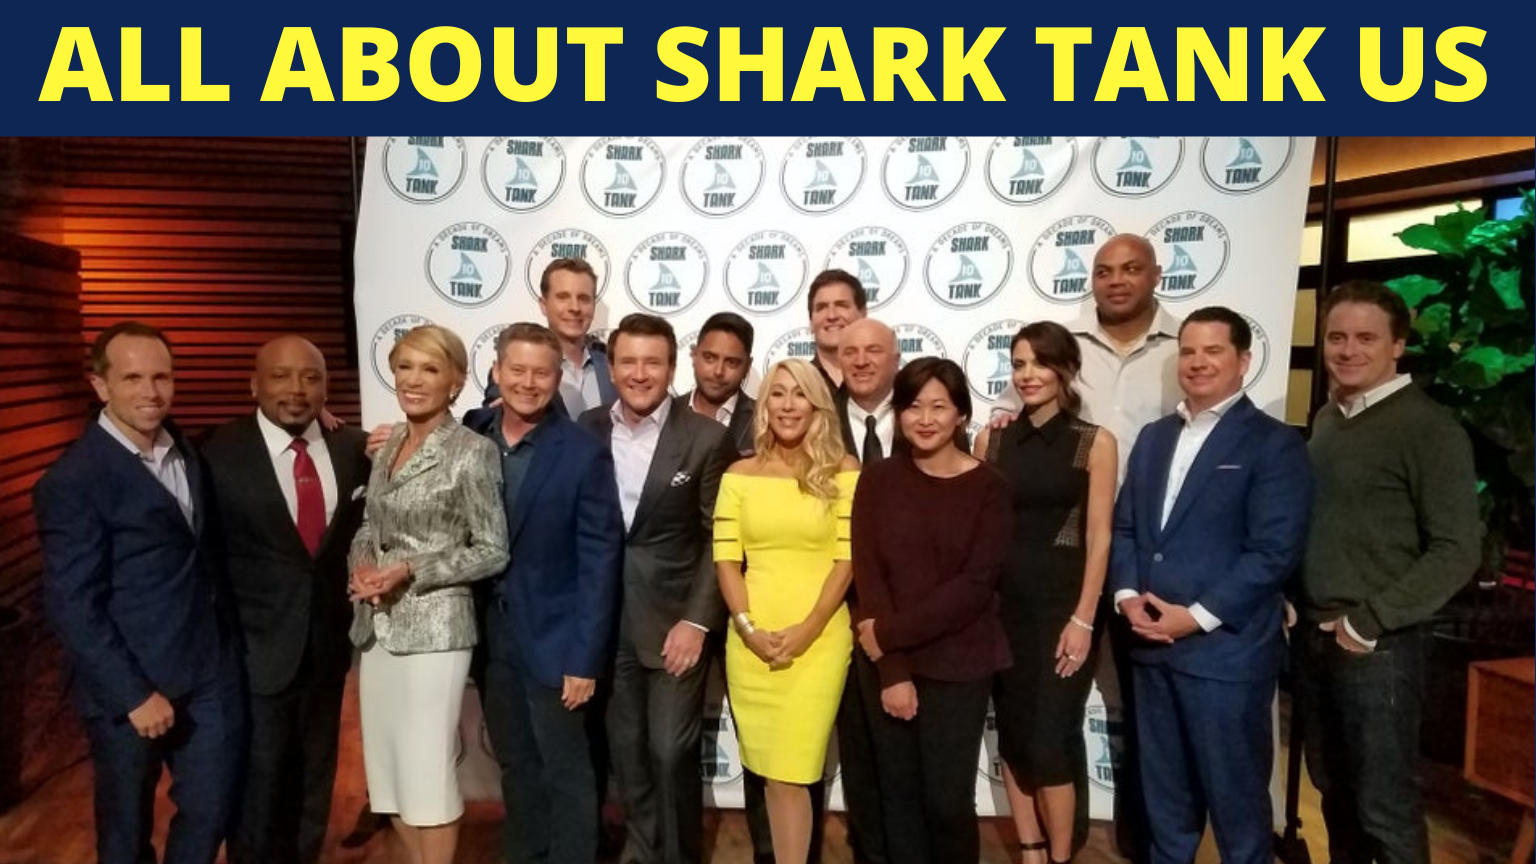 Shark tank us united states